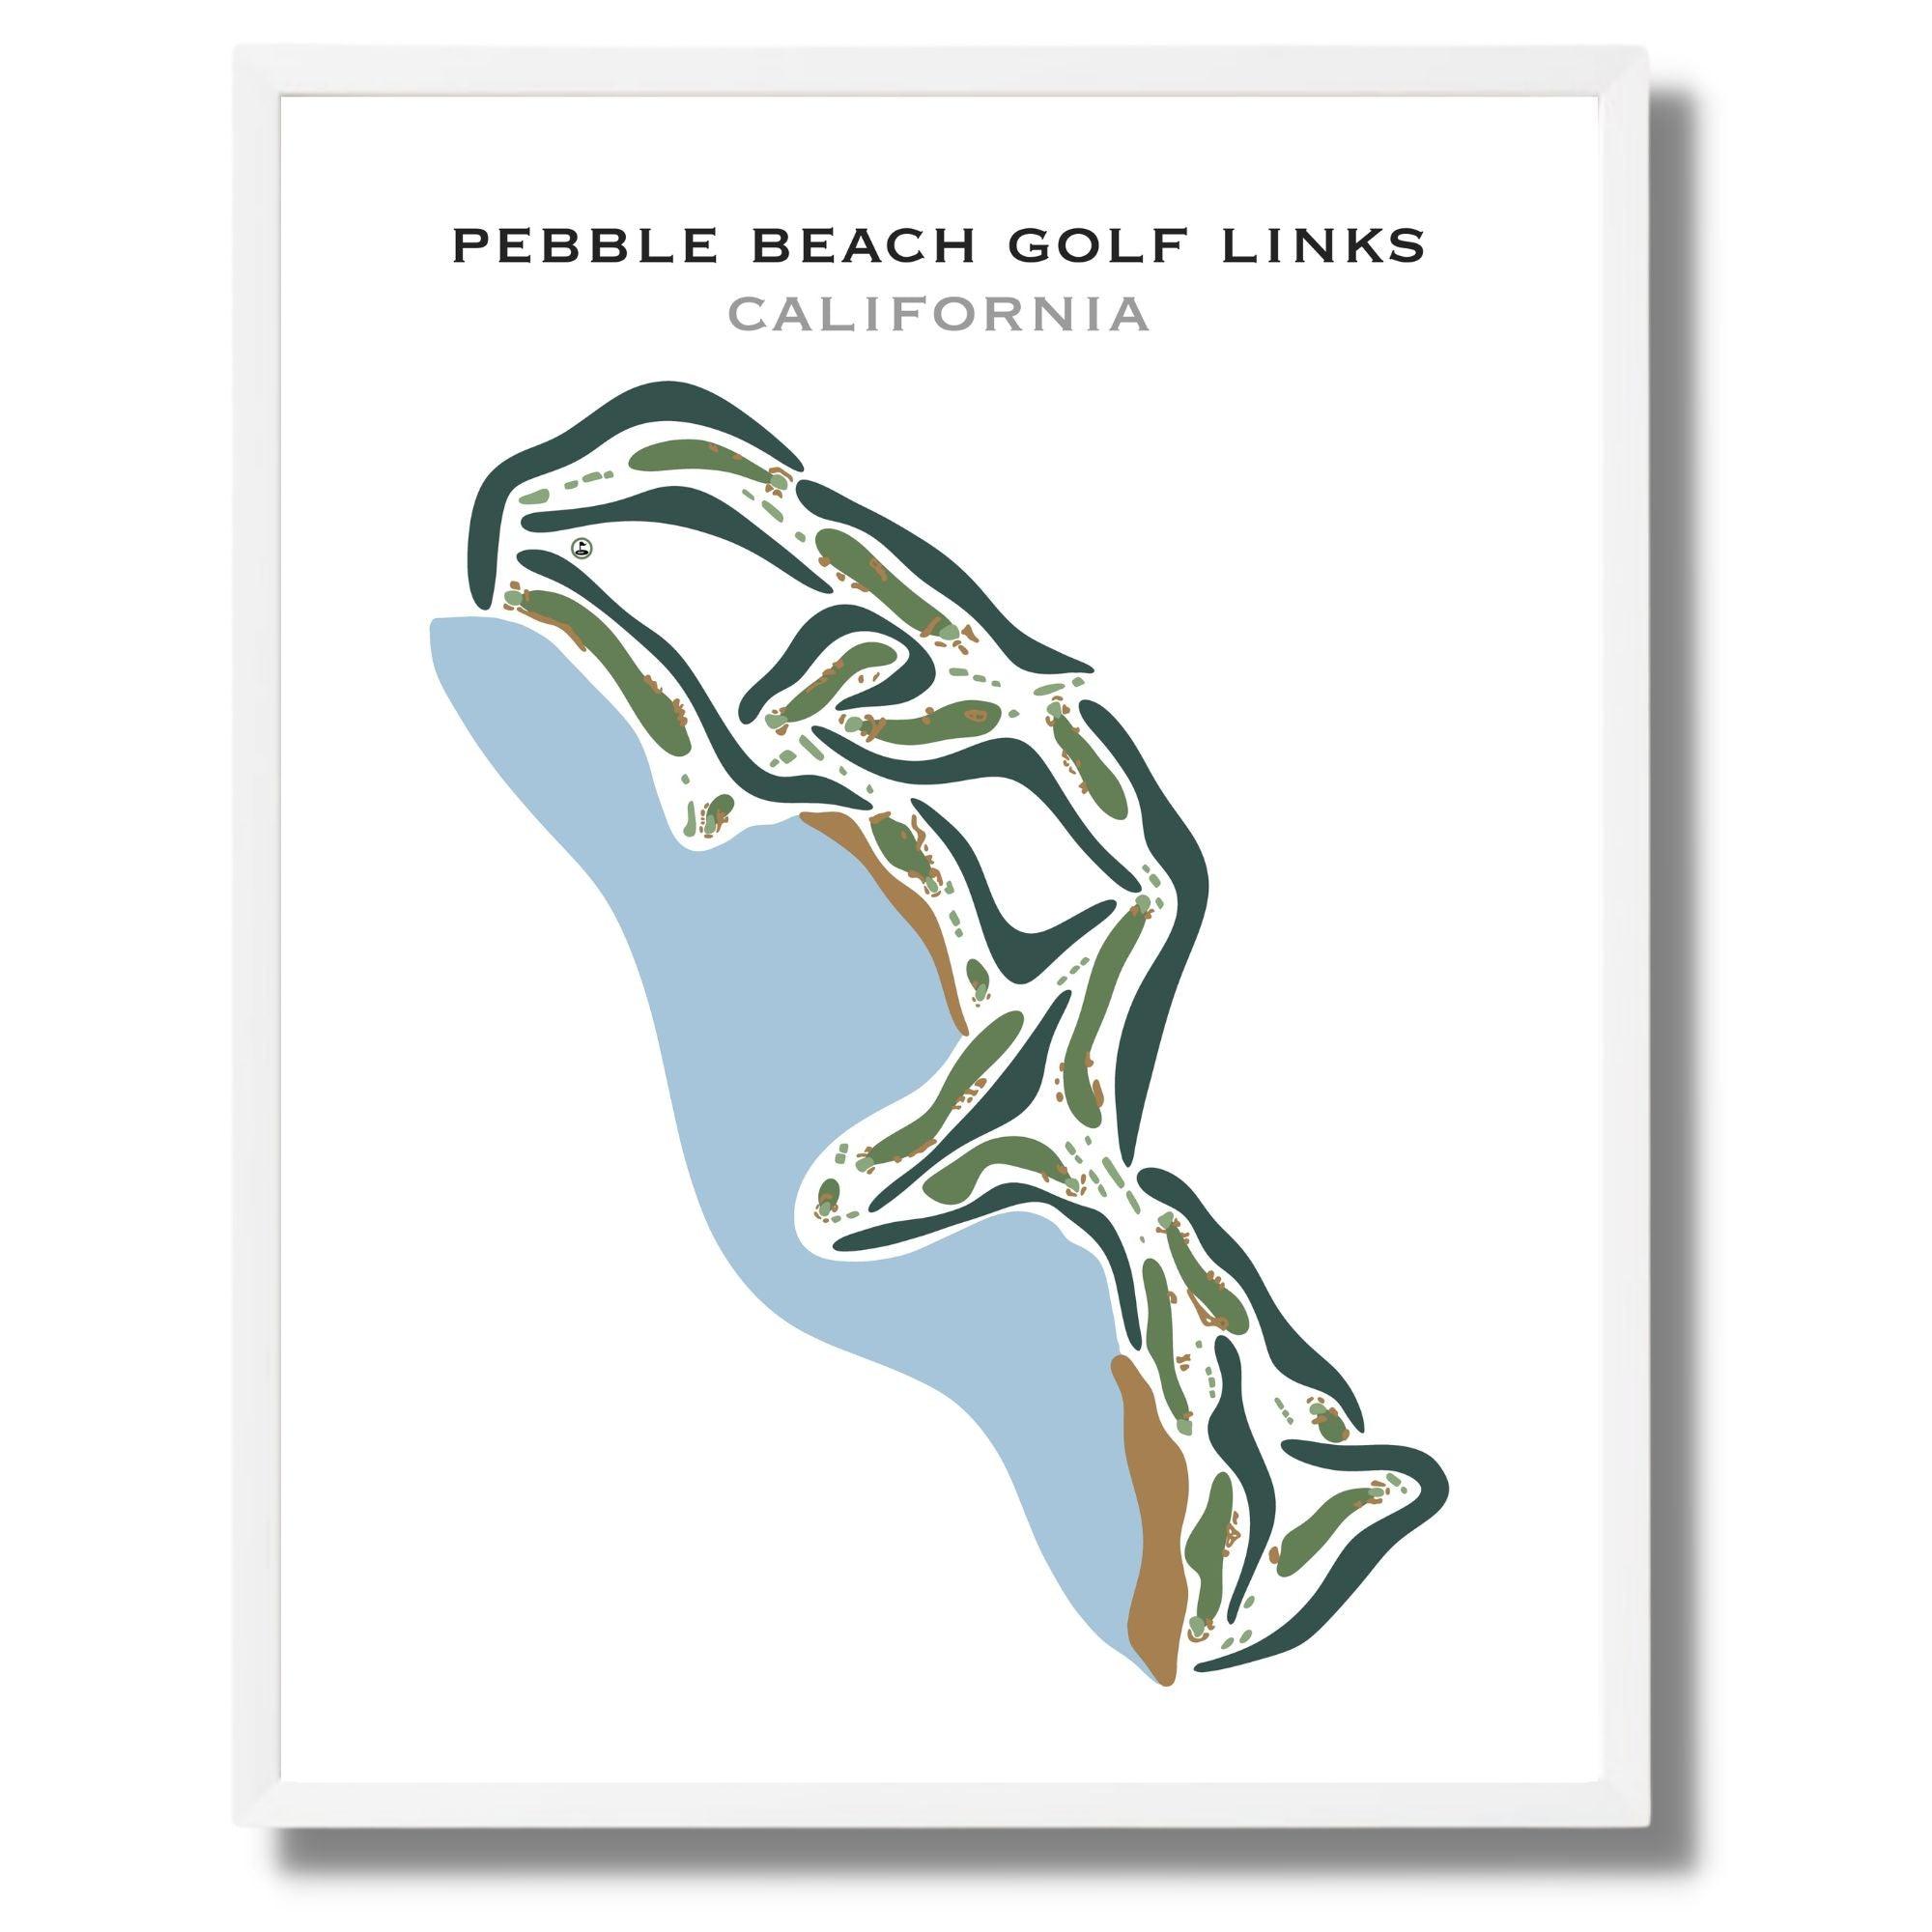 Pebble Beach Golf Links, California - Printed Golf Courses